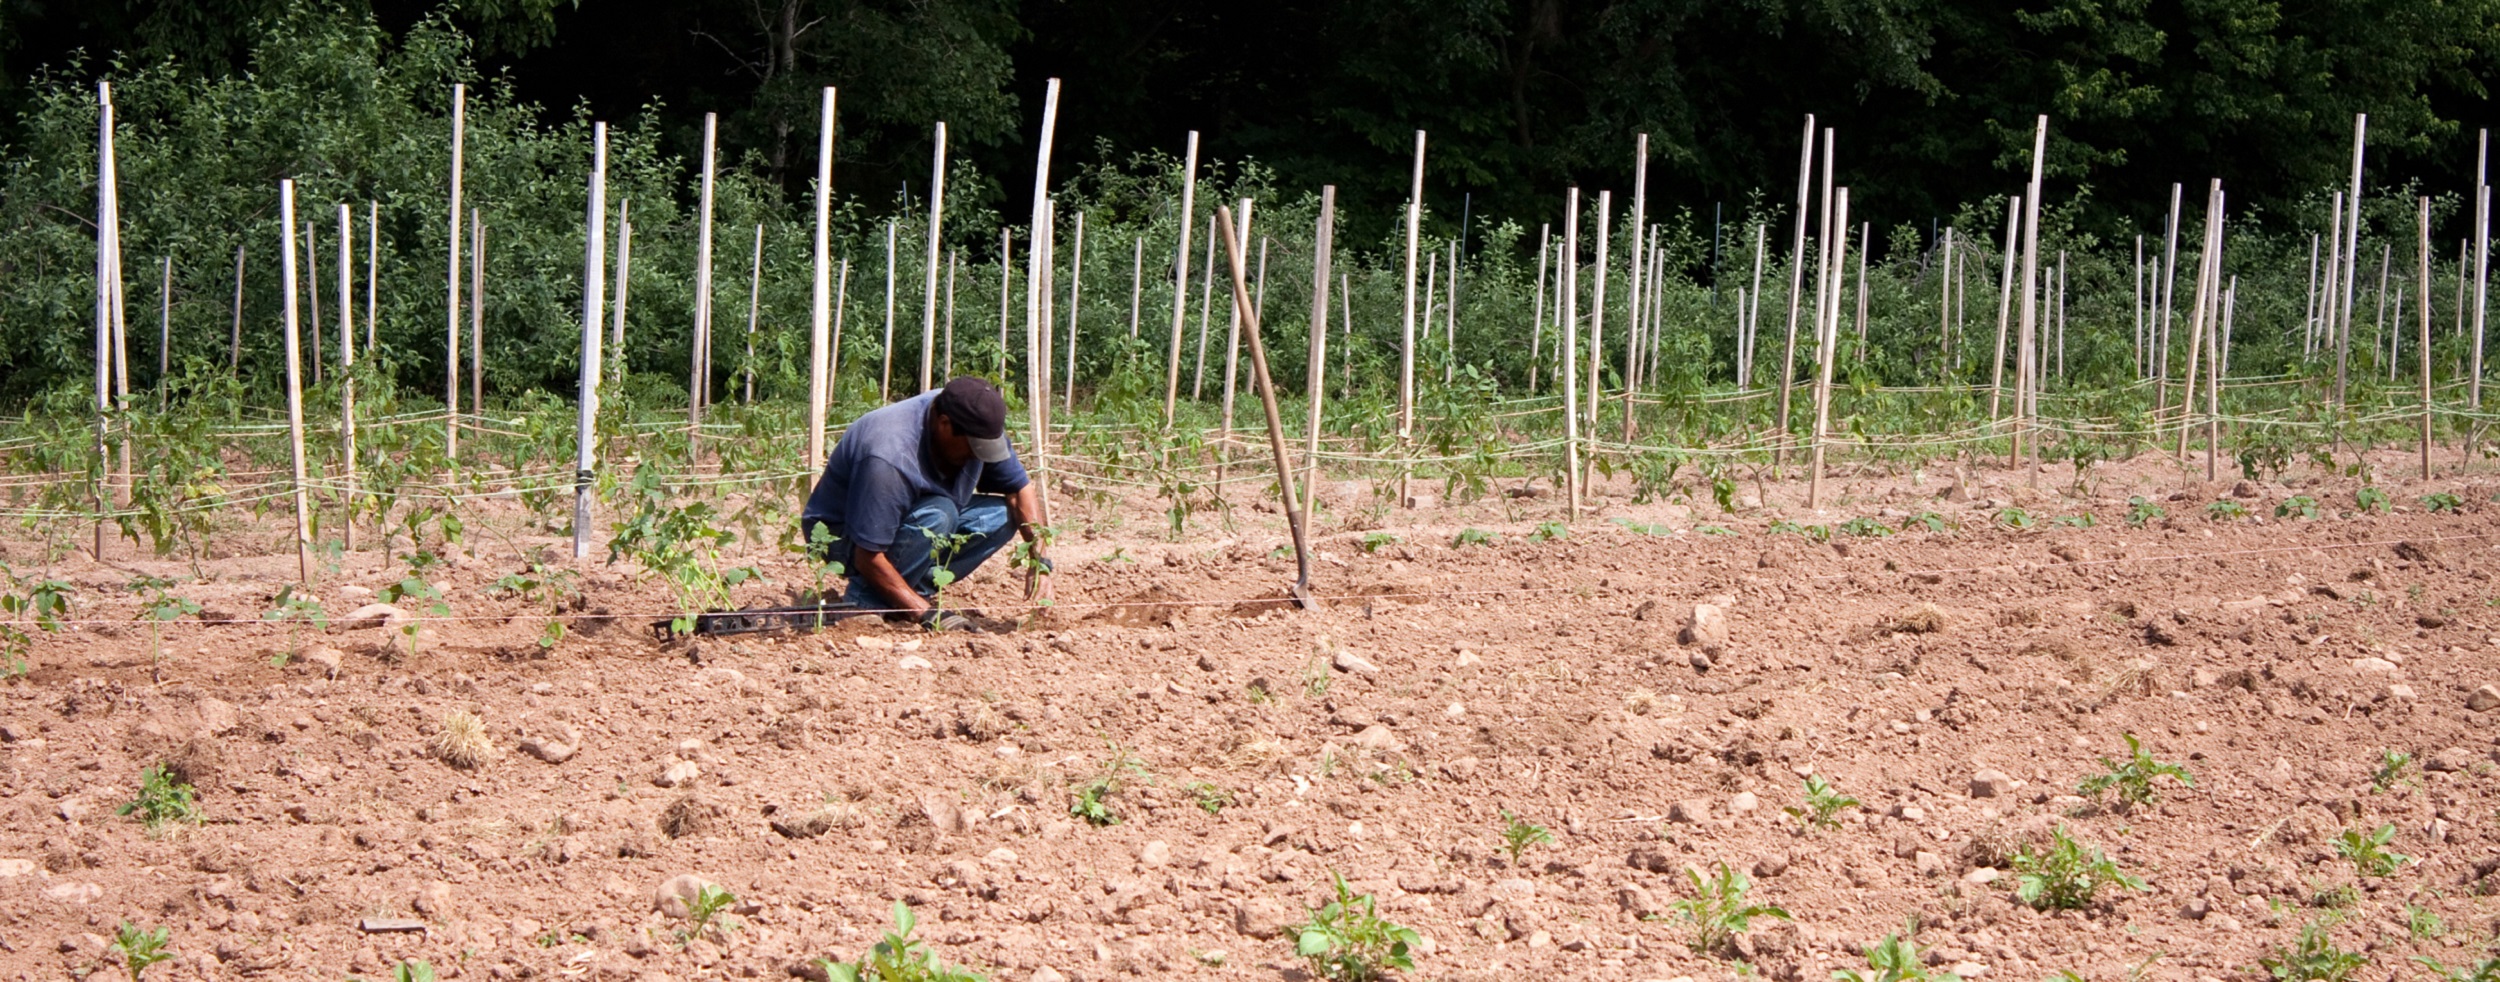 farmer planting tomato plants in a field